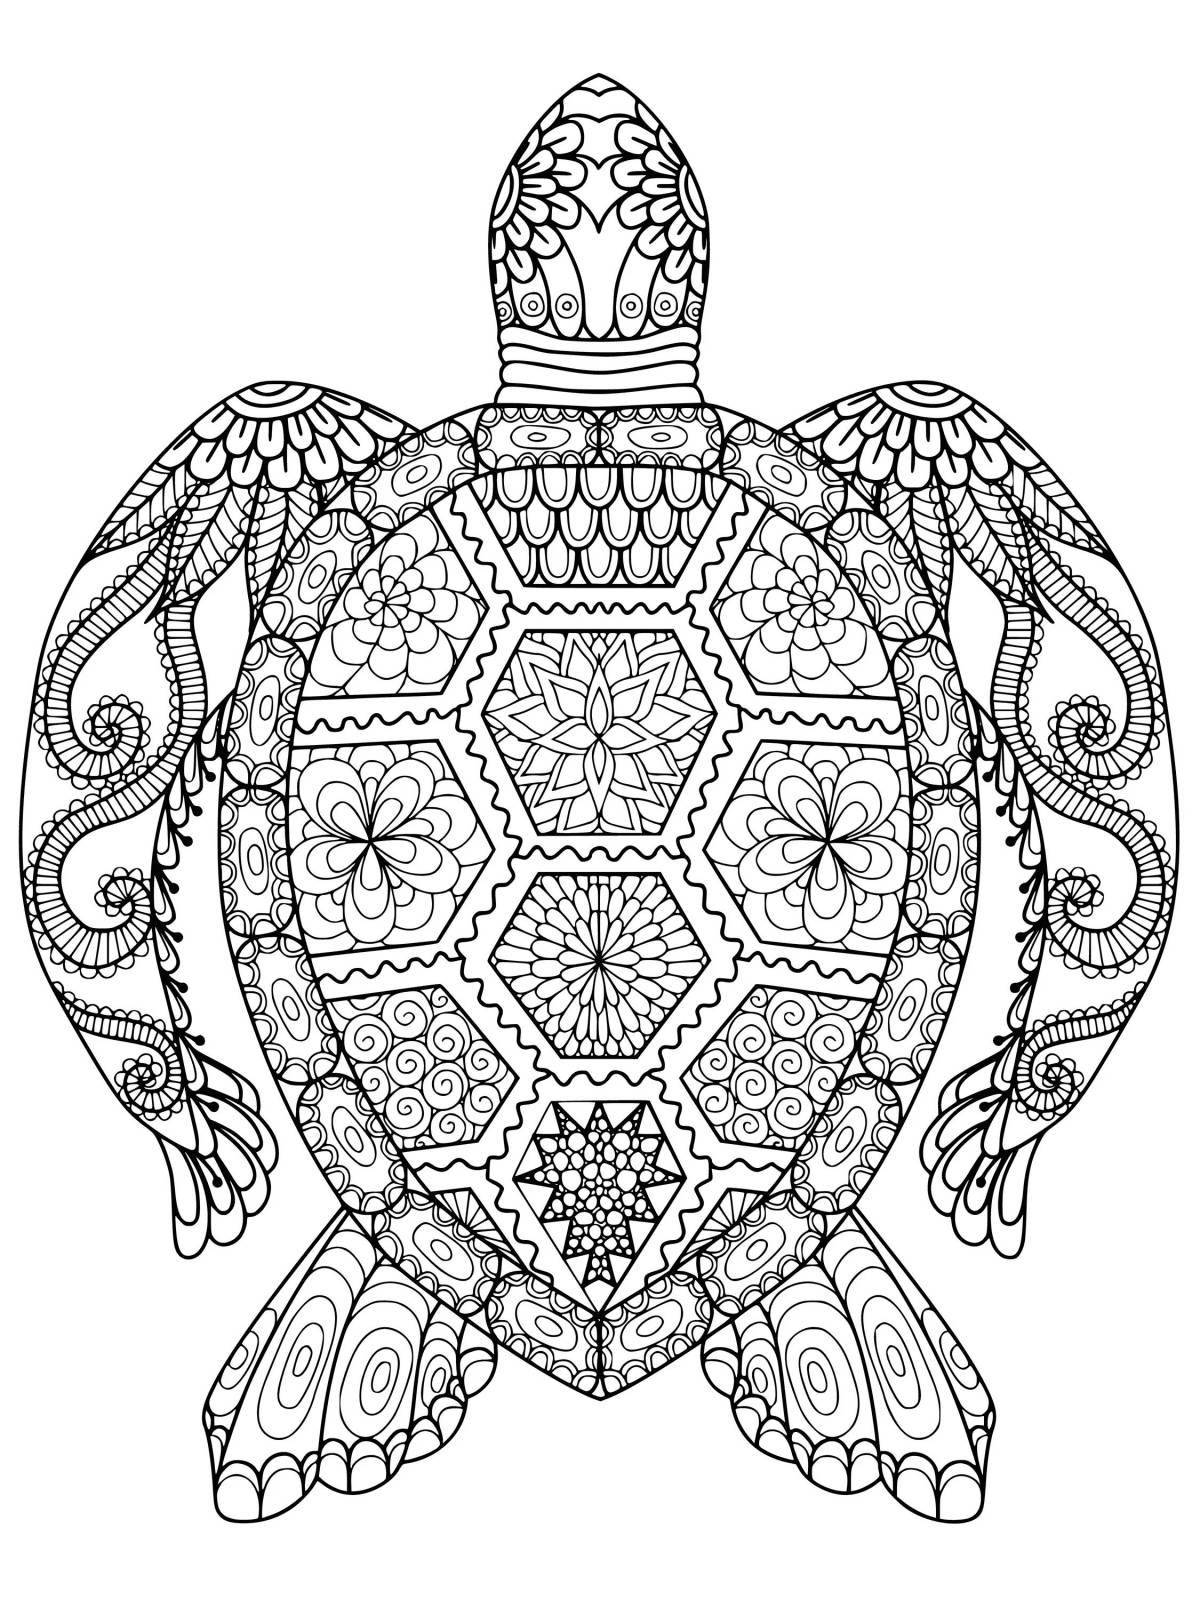 Coloring majestic anti-stress turtle